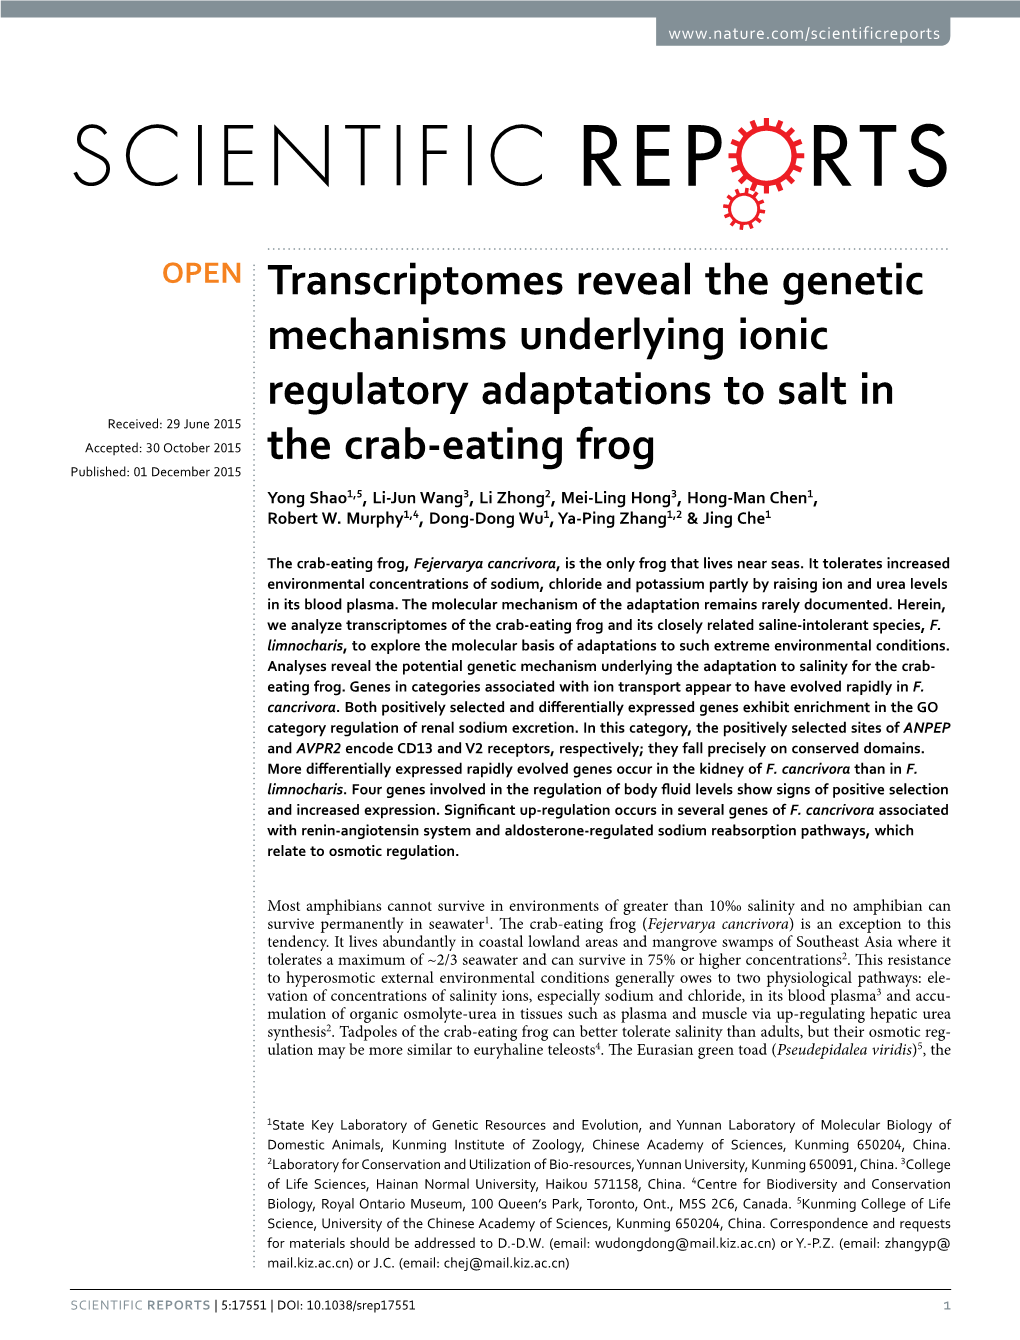 Transcriptomes Reveal the Genetic Mechanisms Underlying Ionic